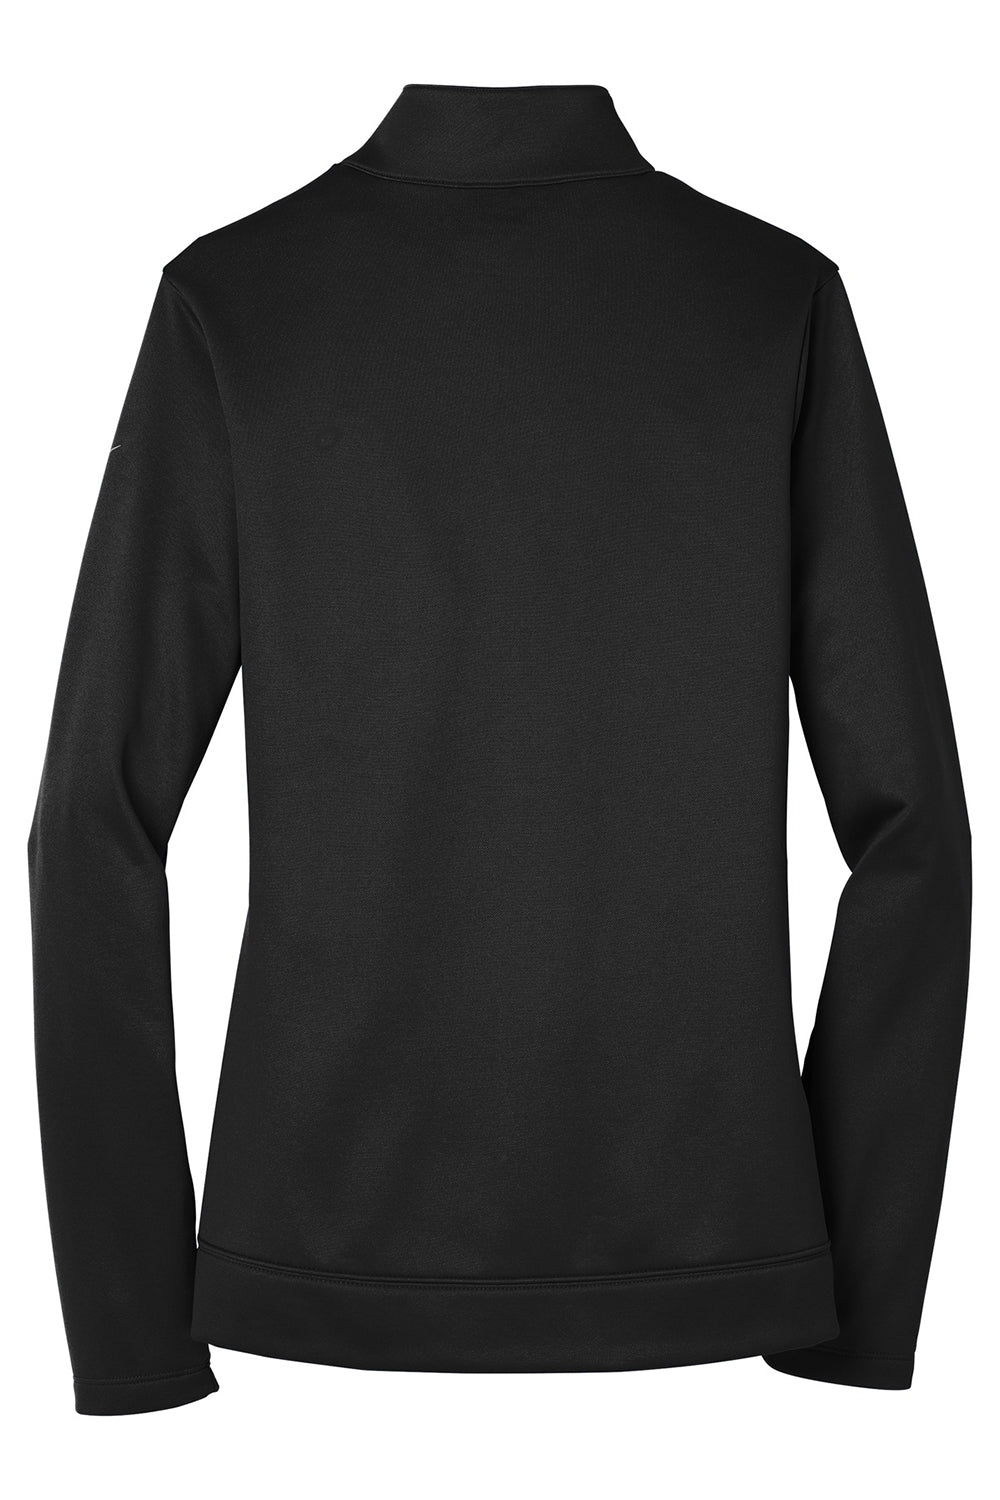 Nike NKAH6260 Womens Therma-Fit Moisture Wicking Fleece Full Zip Sweatshirt Black Flat Back